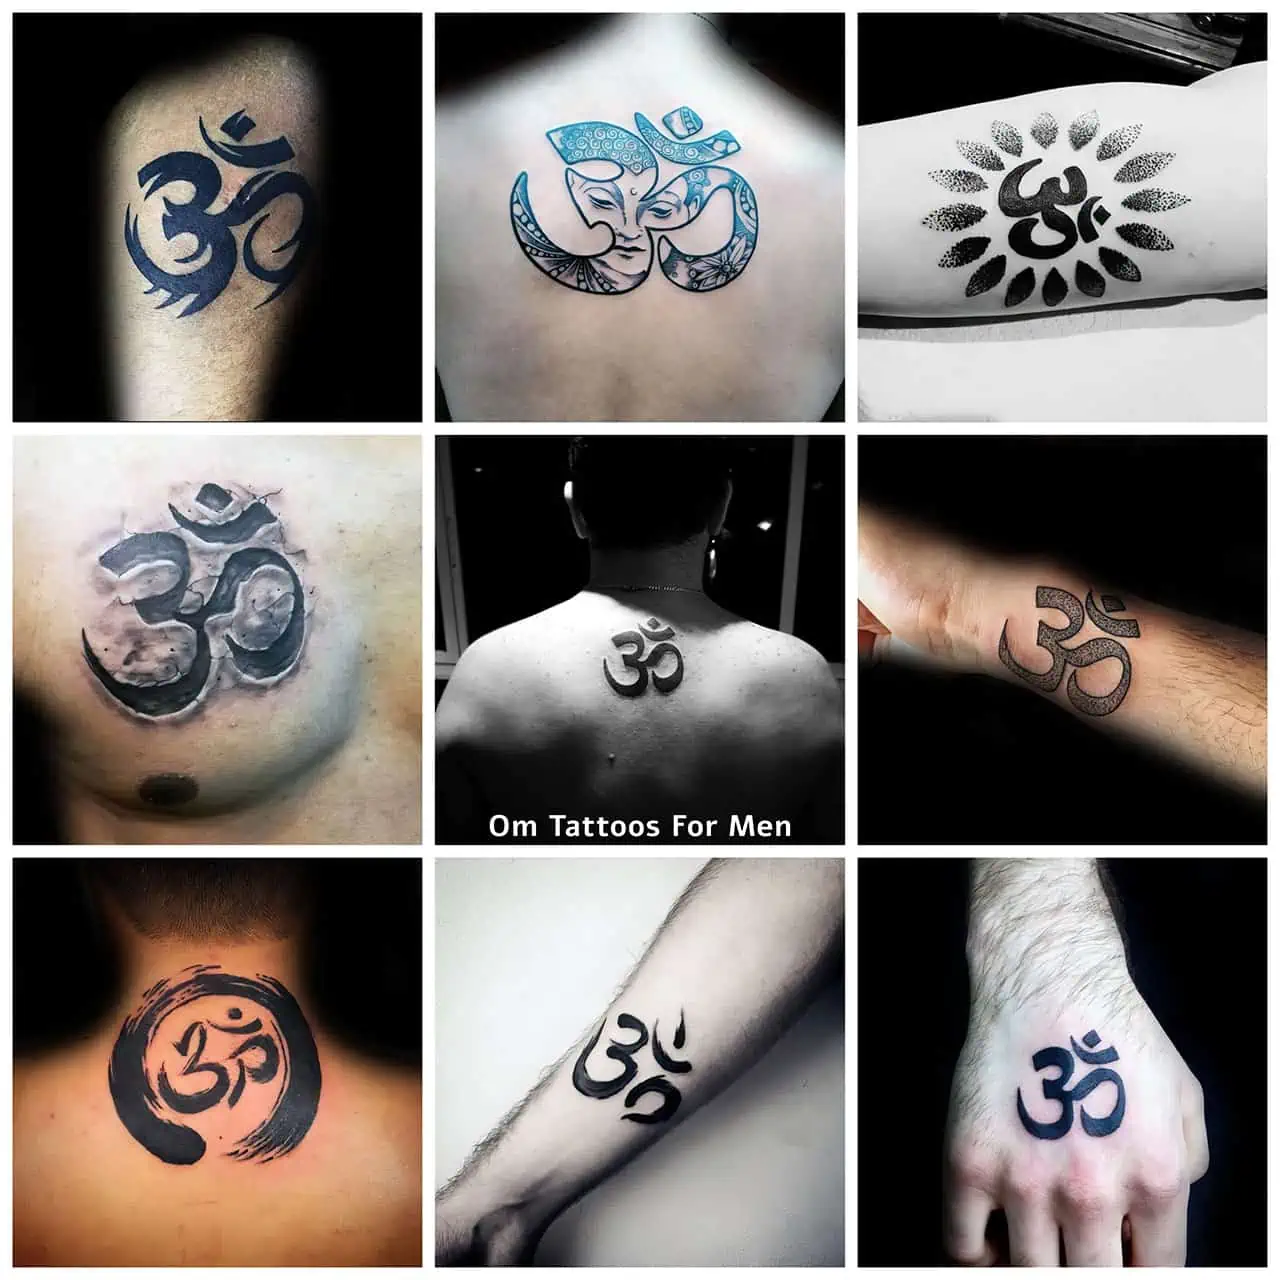 Share more than 172 common tattoo symbols